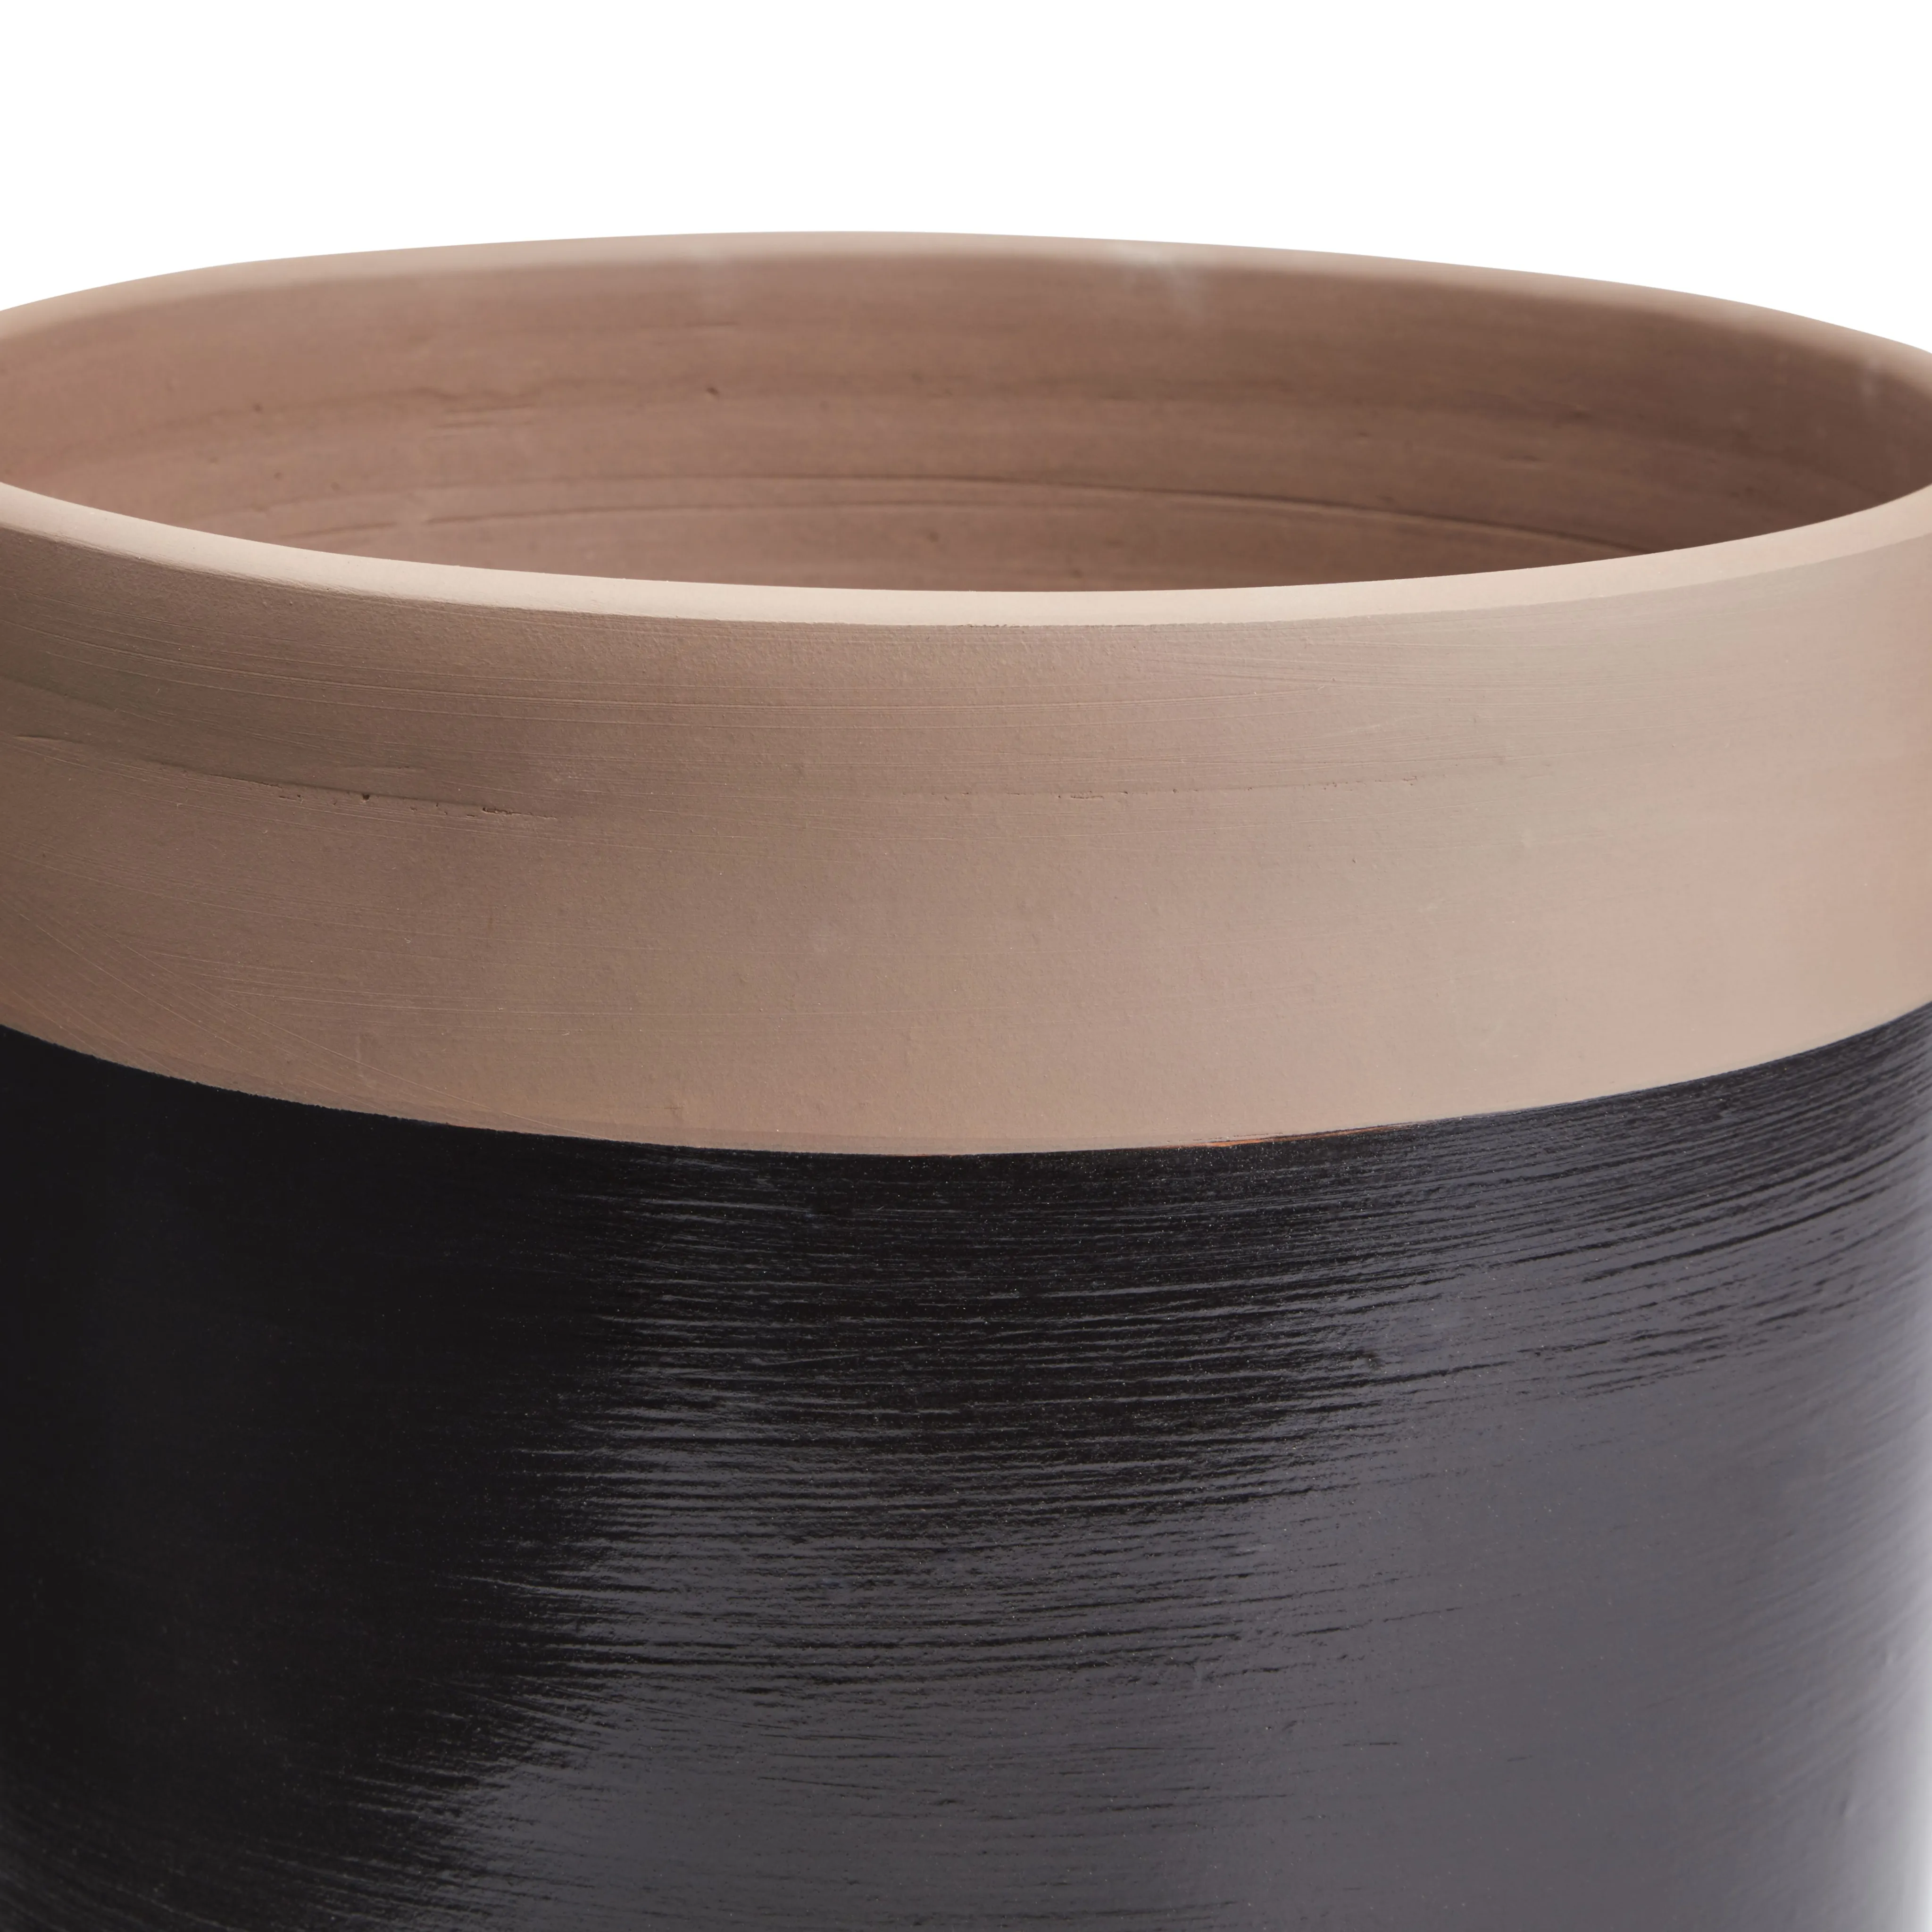 Black Clay Dipped Round Plant pot (Dia)24.7cm